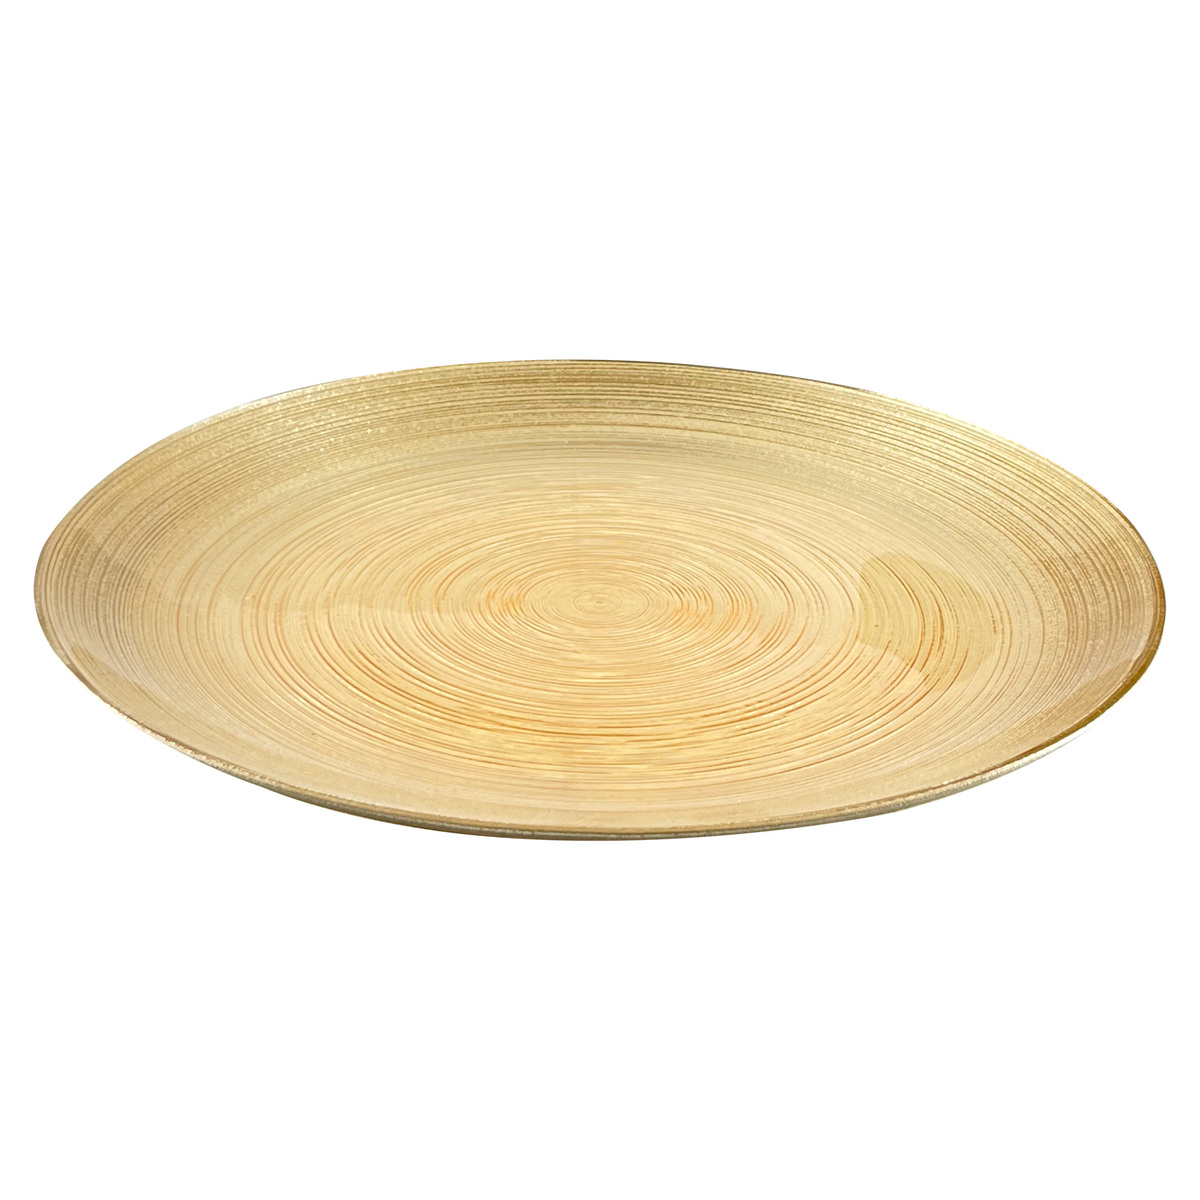 Glascom Decorative Serving Plate, 28 cm, Amber, ARES0557